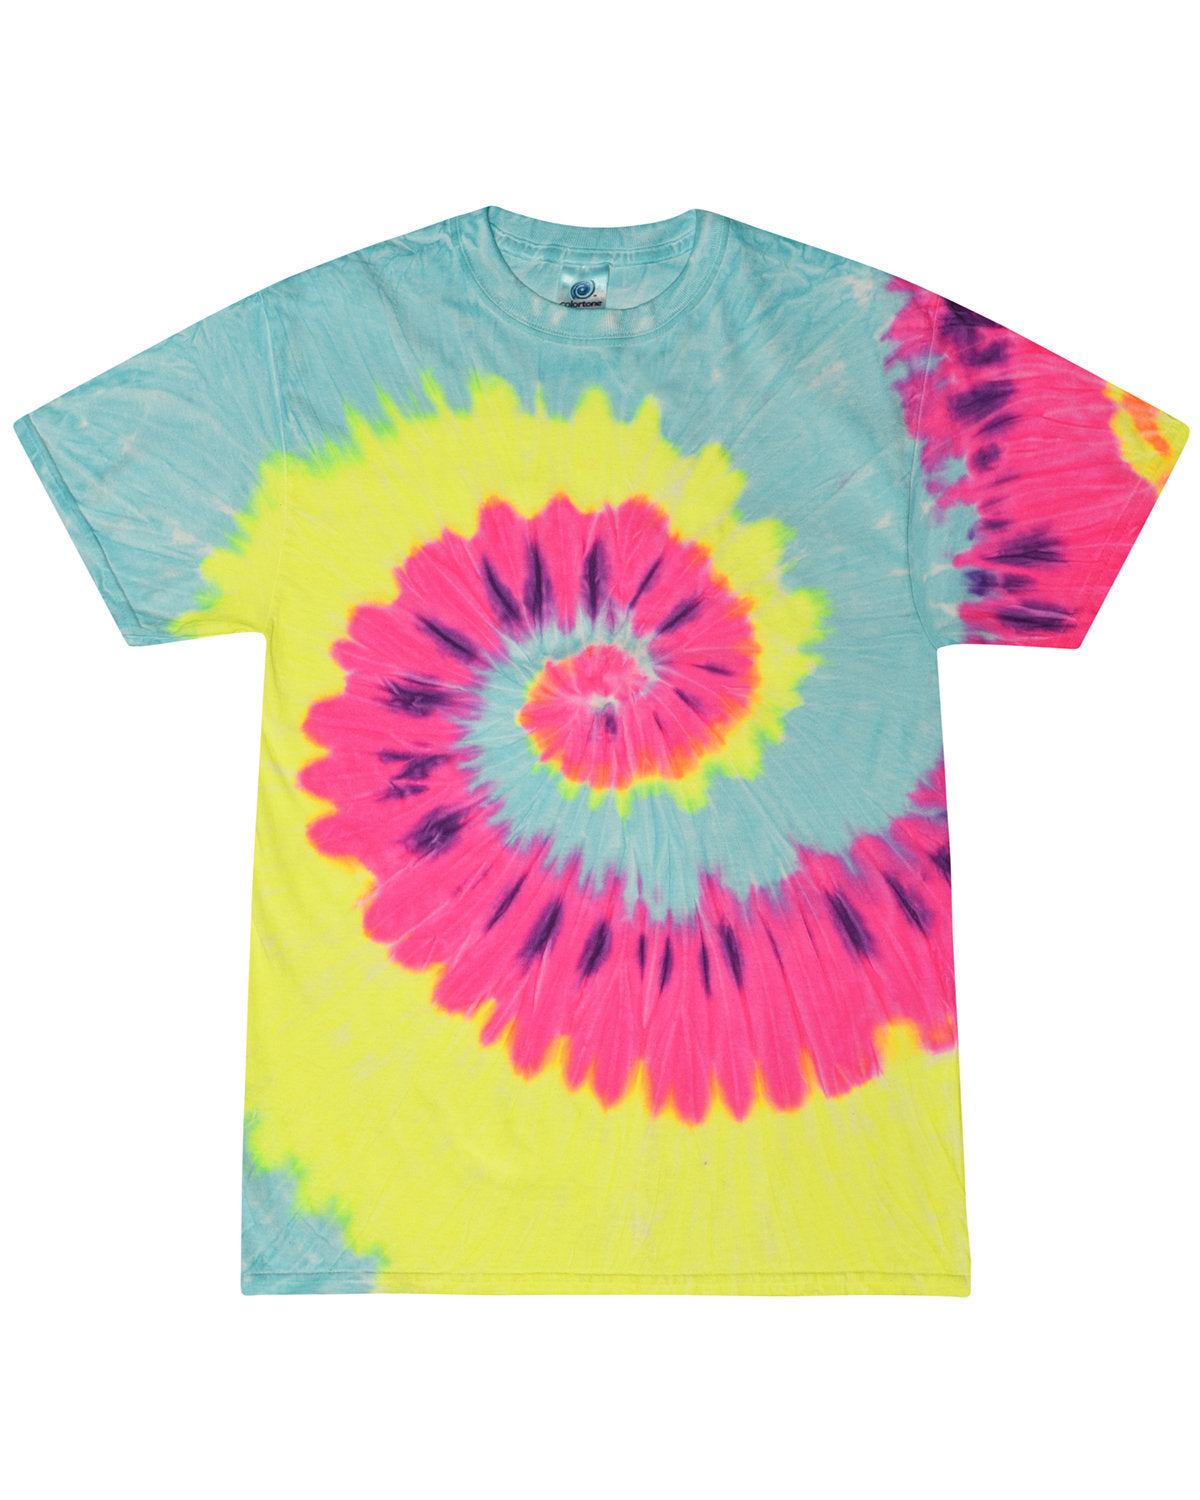 Multicolor Tie-Dye T-shirt (8522291642645)